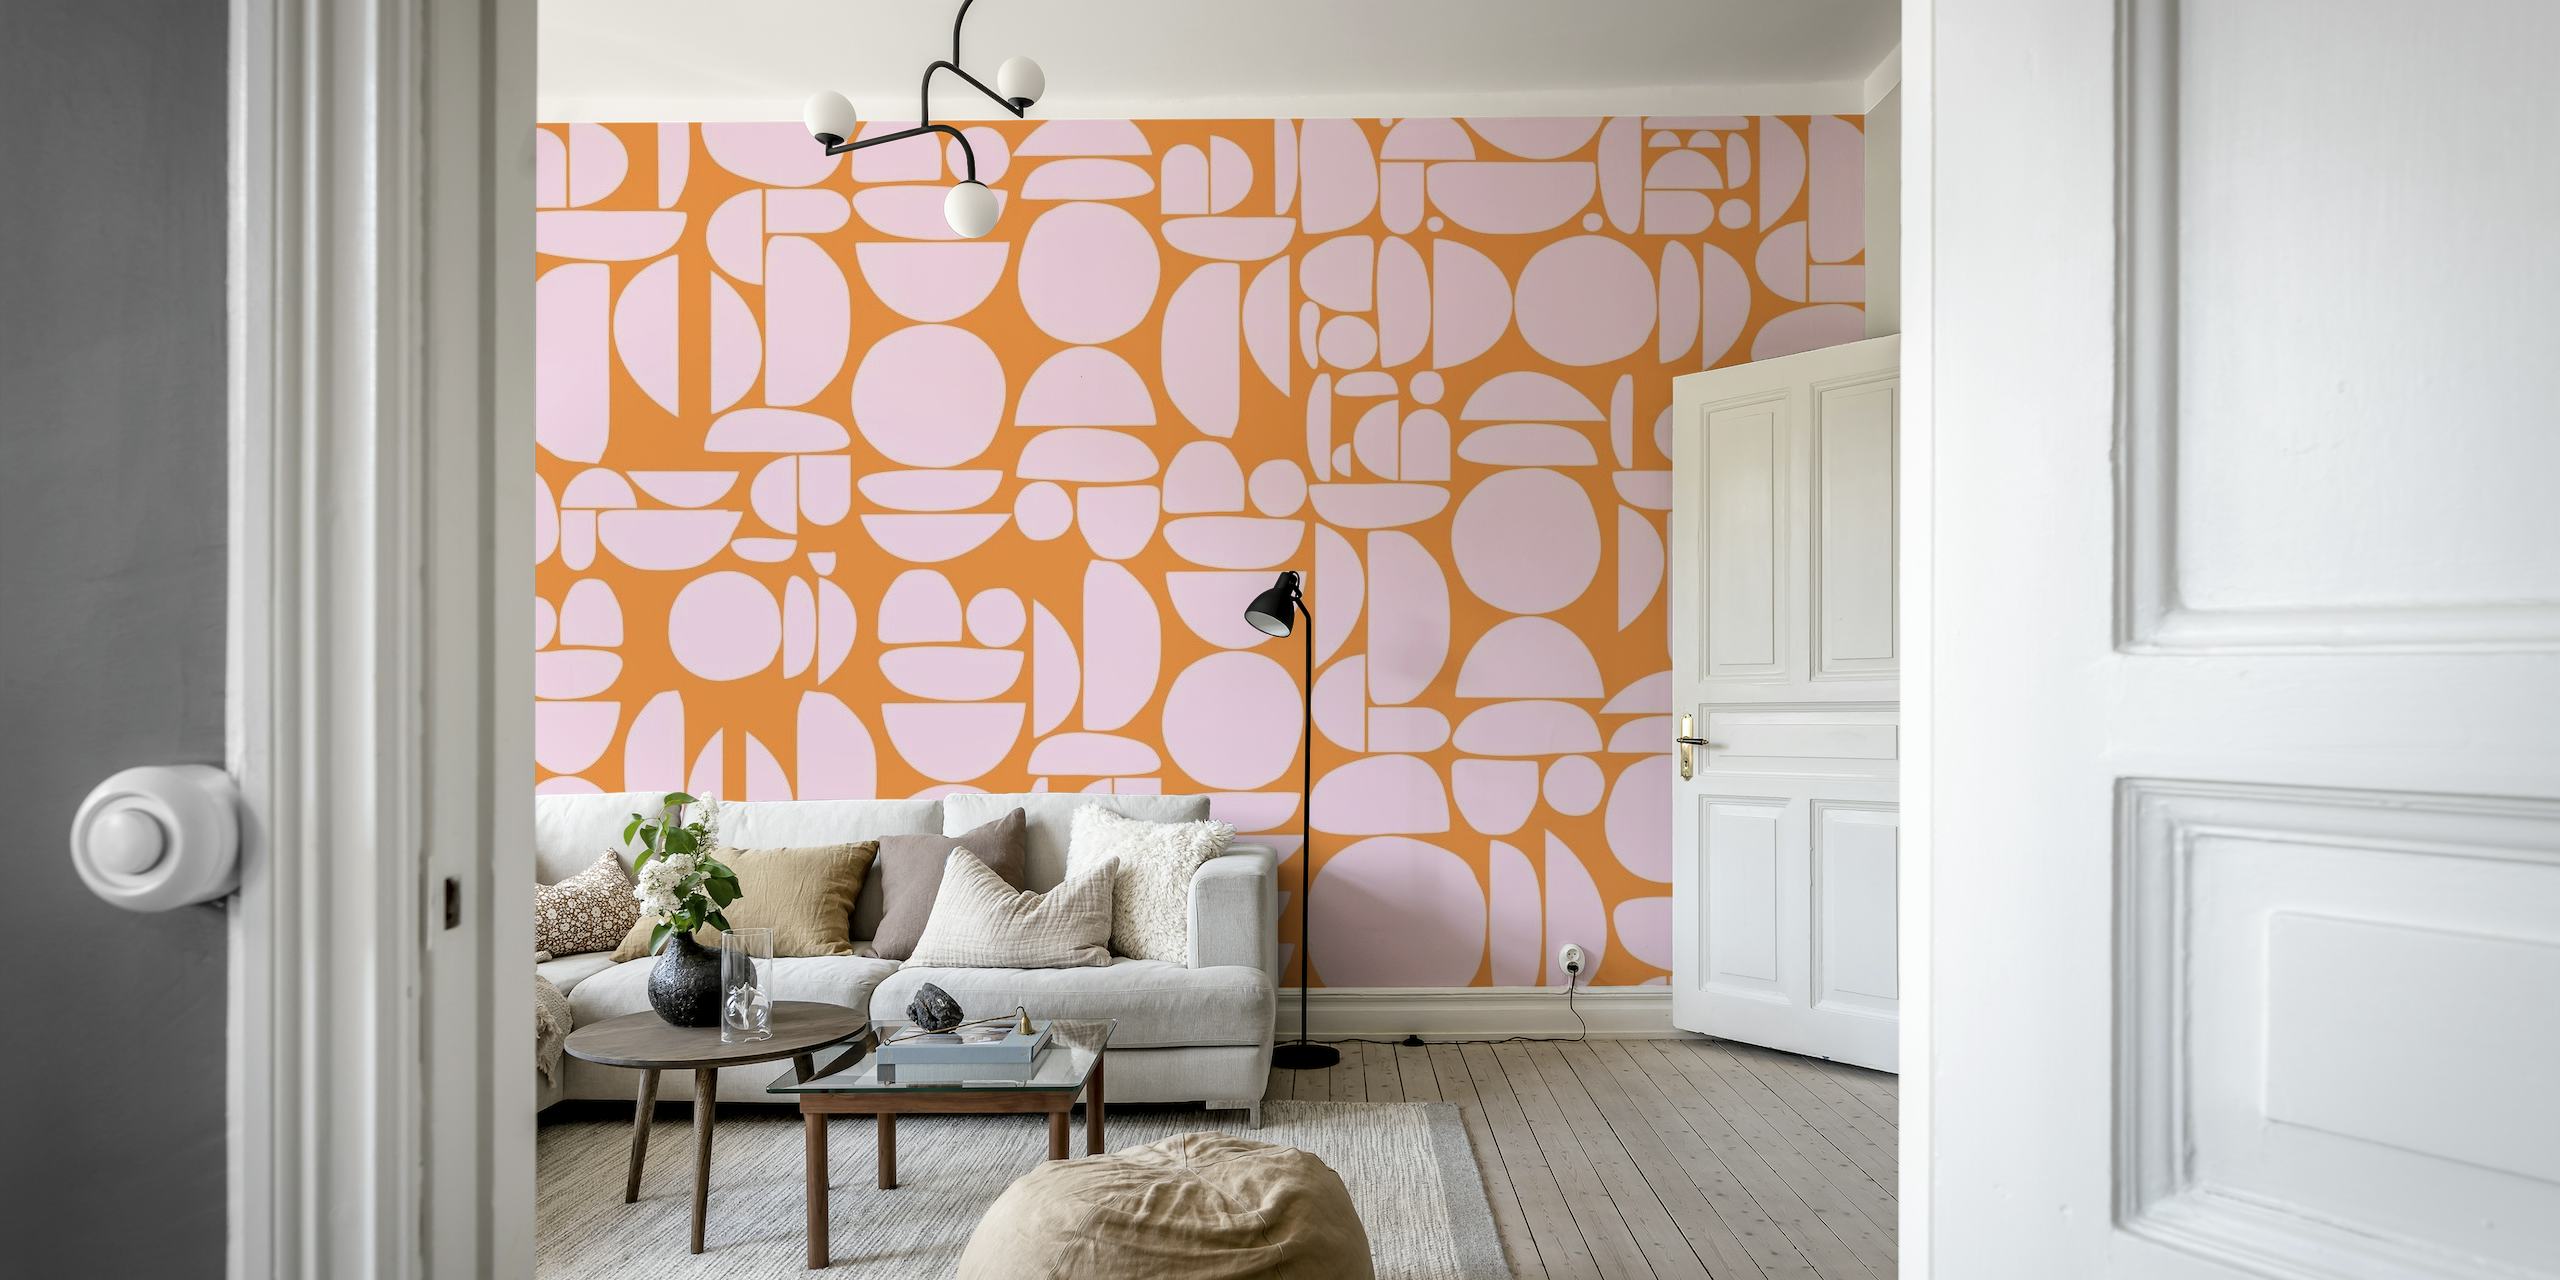 Design de mural de parede abstrato laranja e rosa com formas redondas